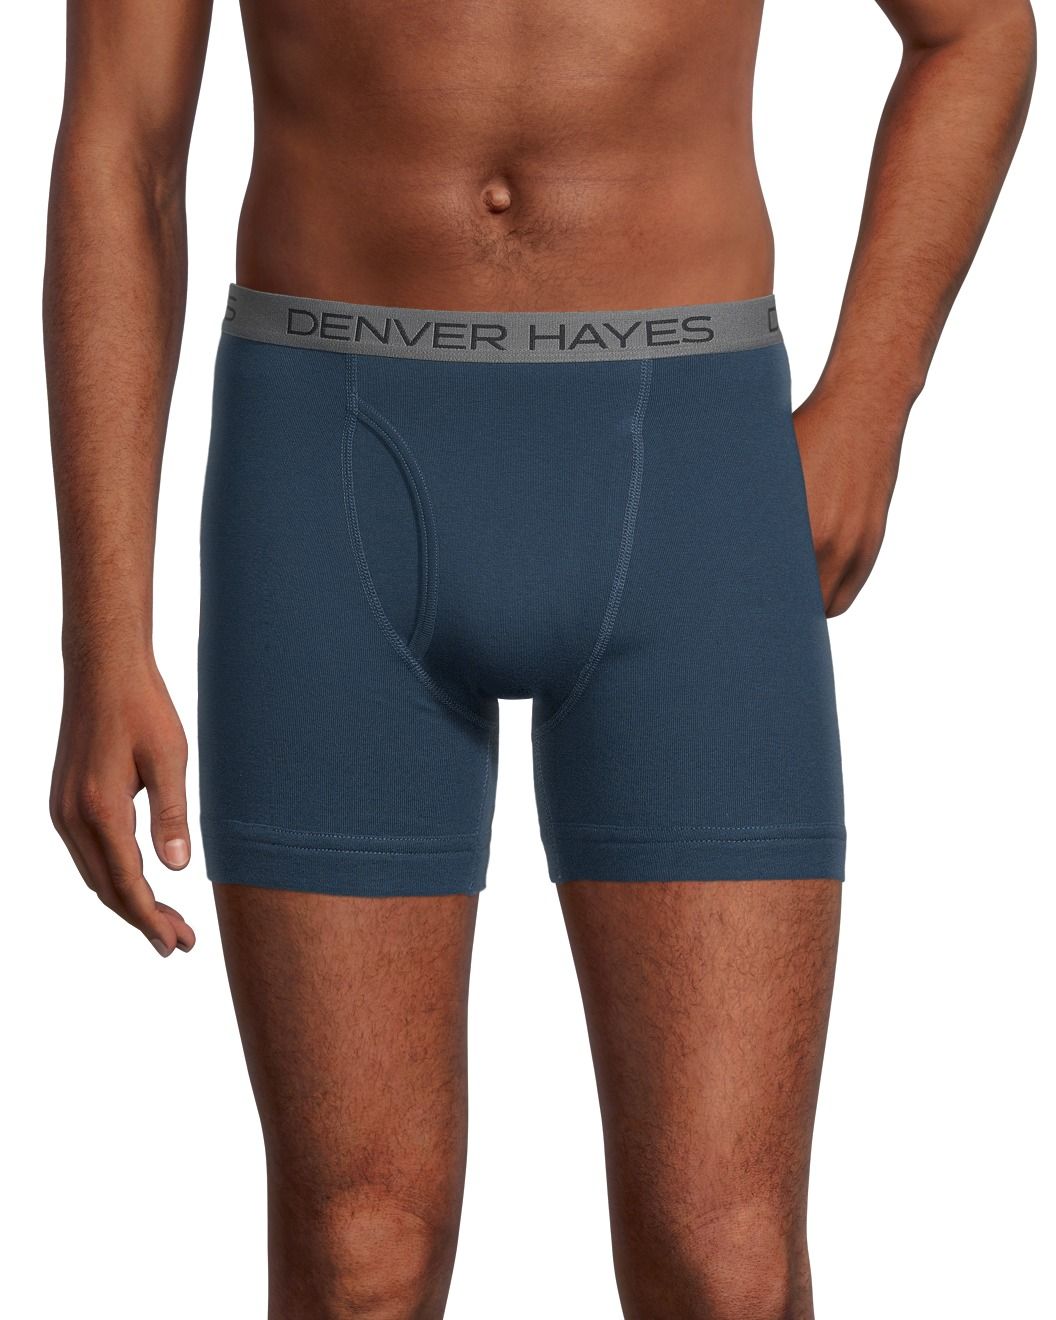 Denver Hayes Men's Novelty Canadiana Pattern Crew Socks